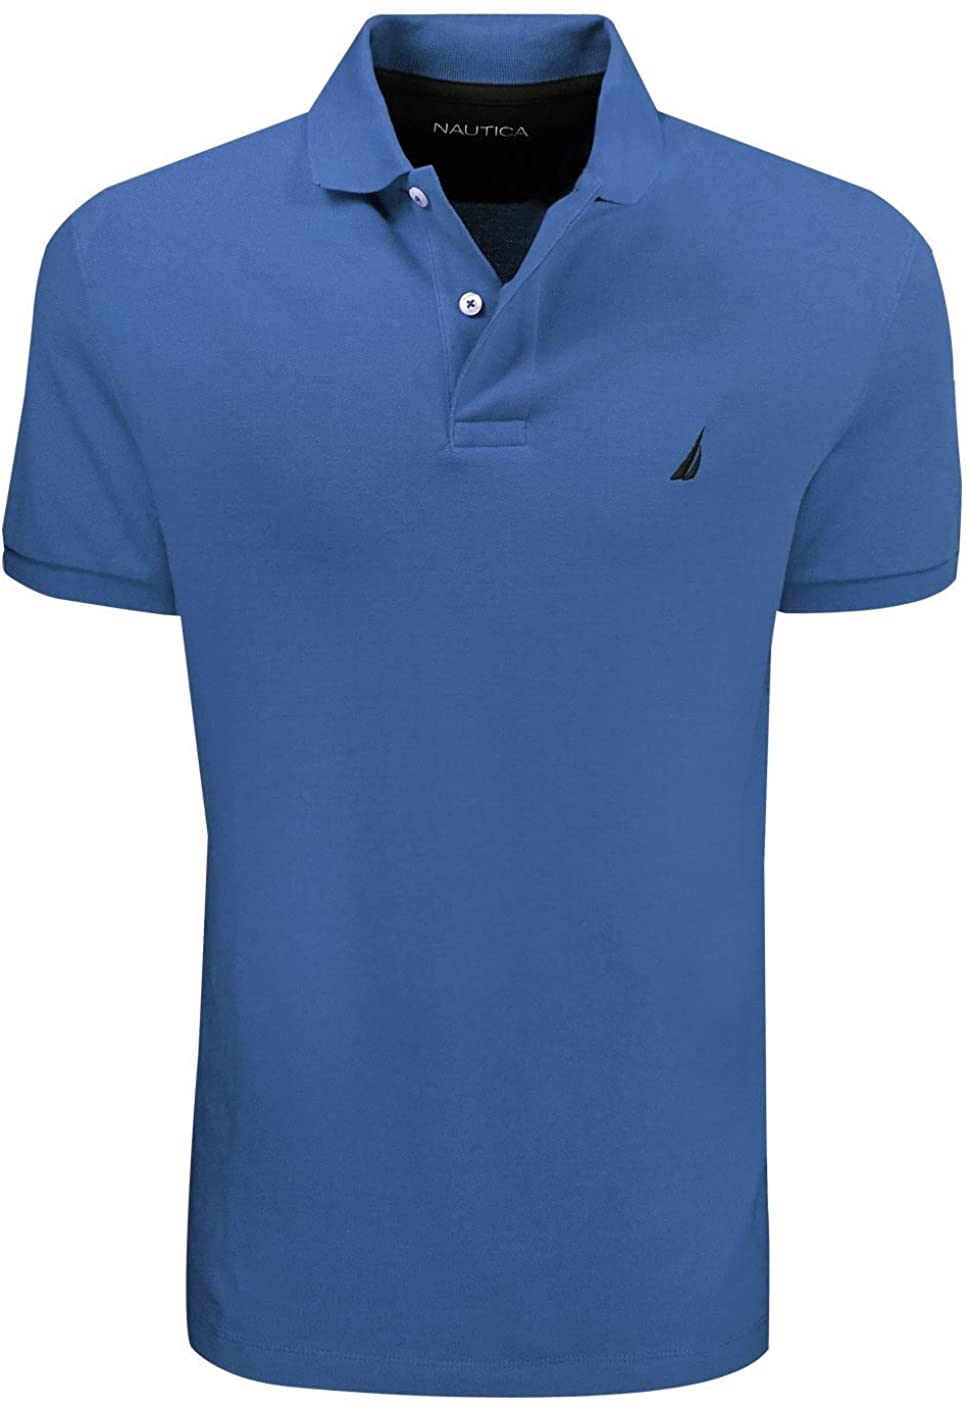 GetUSCart- Nautica Men's Classic Fit Short Sleeve Solid Soft Cotton Polo  Shirt, ash Green, Medium